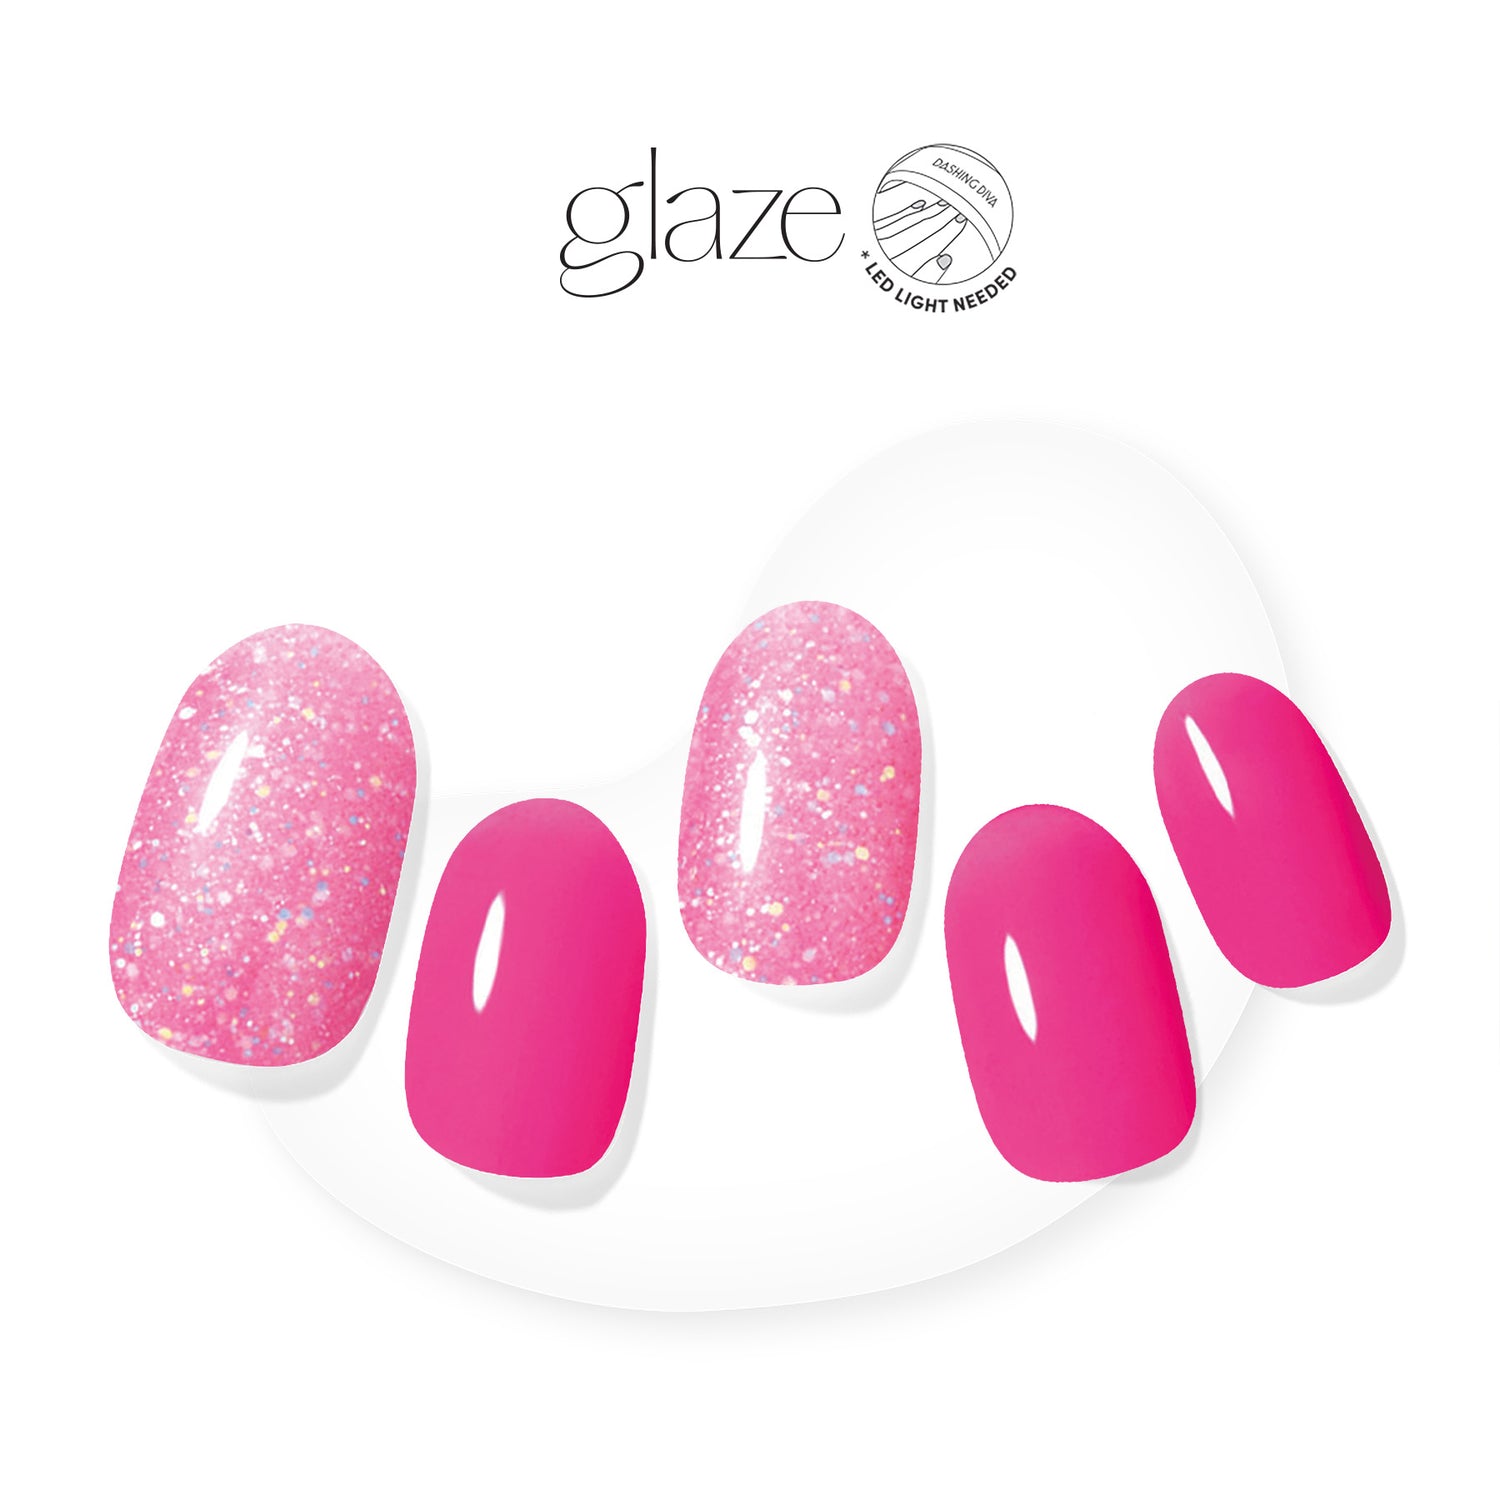 Dashing Diva GLAZE bright magenta Summer semi cured gel nail strips with glitter accents.